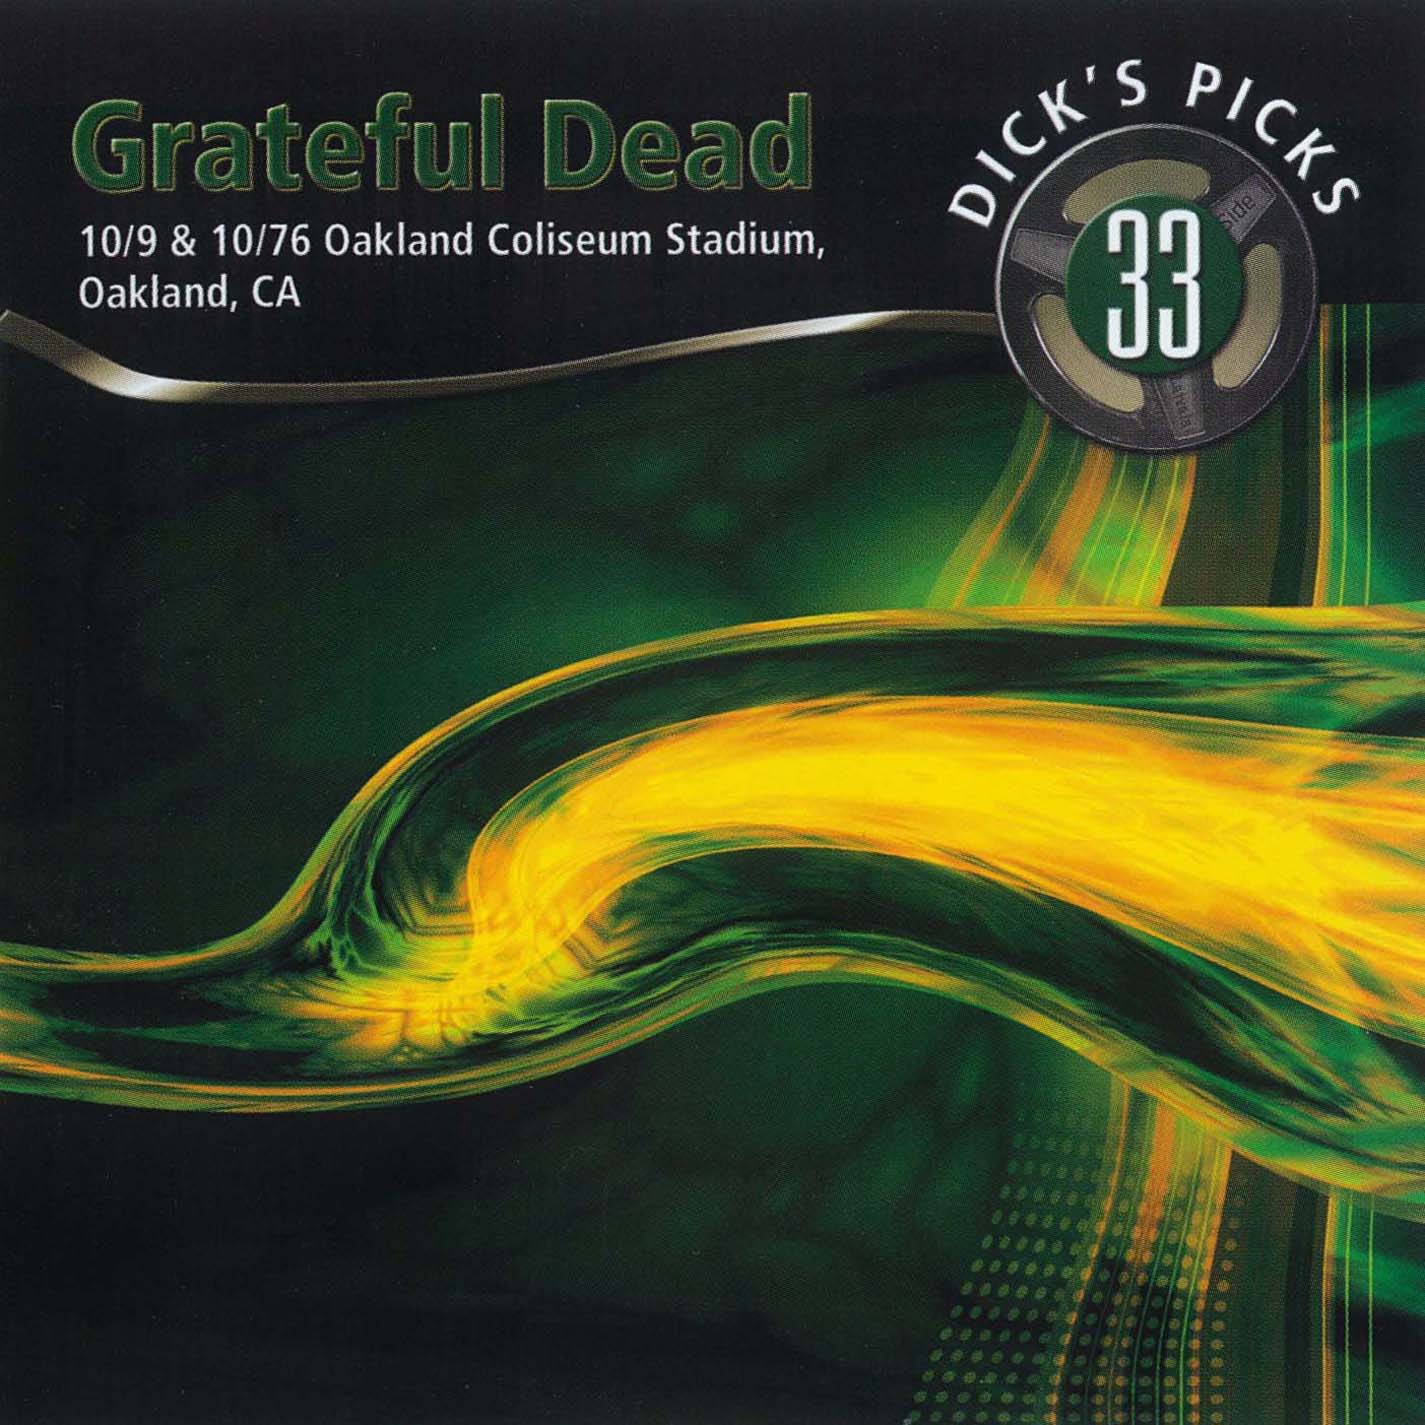 Grateful Dead Dick's Picks 33 album cover artwork